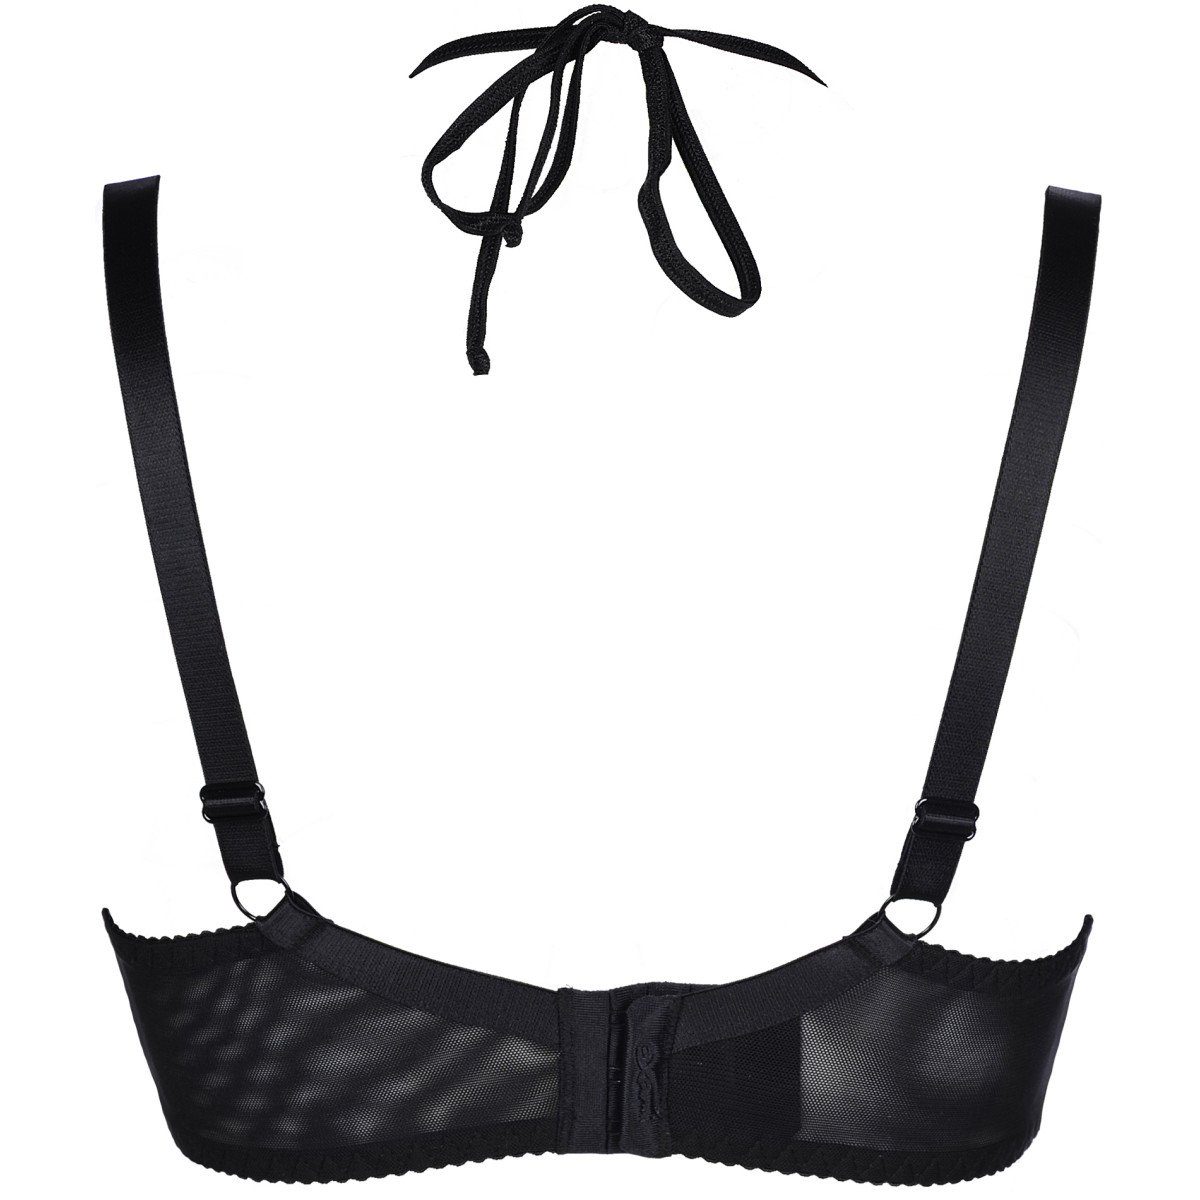 Axami Size Plus Bustier V-8691PS black bra (80E,95D,95F,80F,85E,85F,90B,90C) Plus - Size